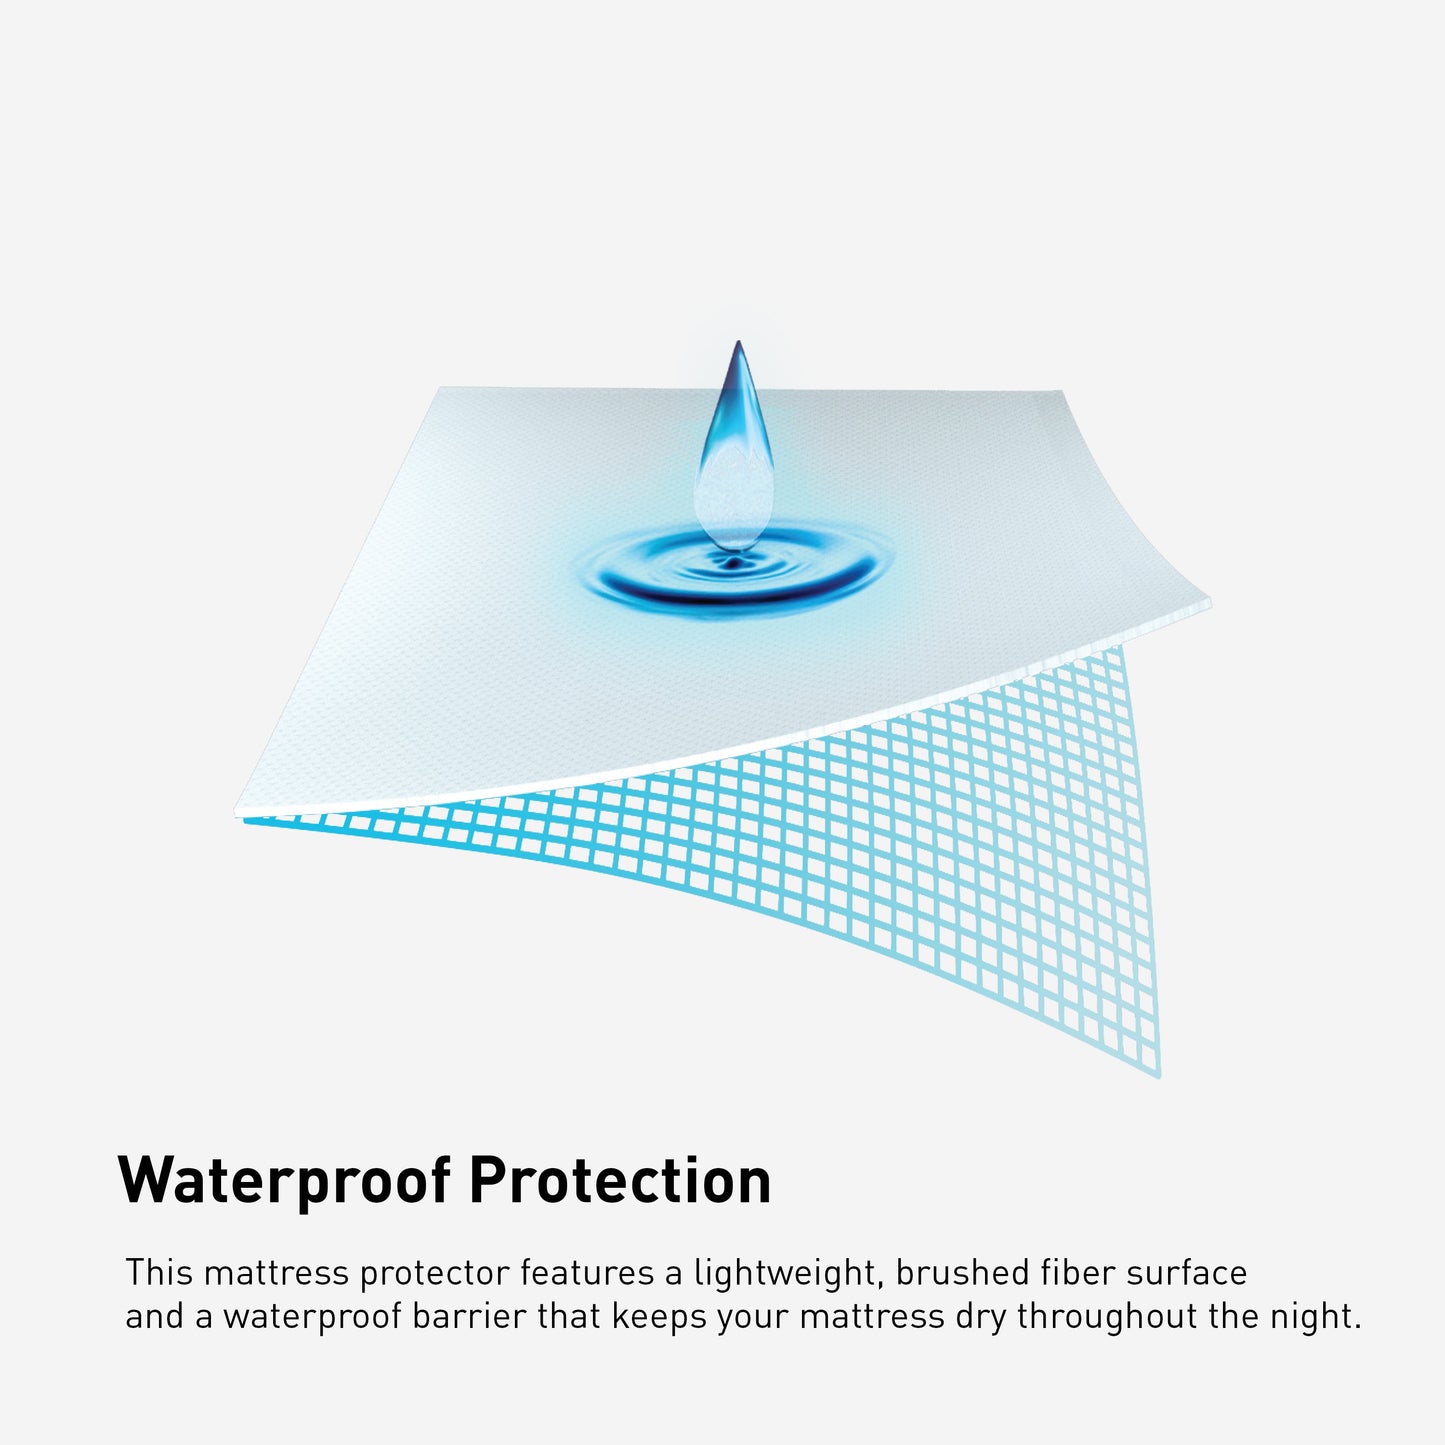 Bedgear iProtect Waterproof Mattress Protector waterproof protection